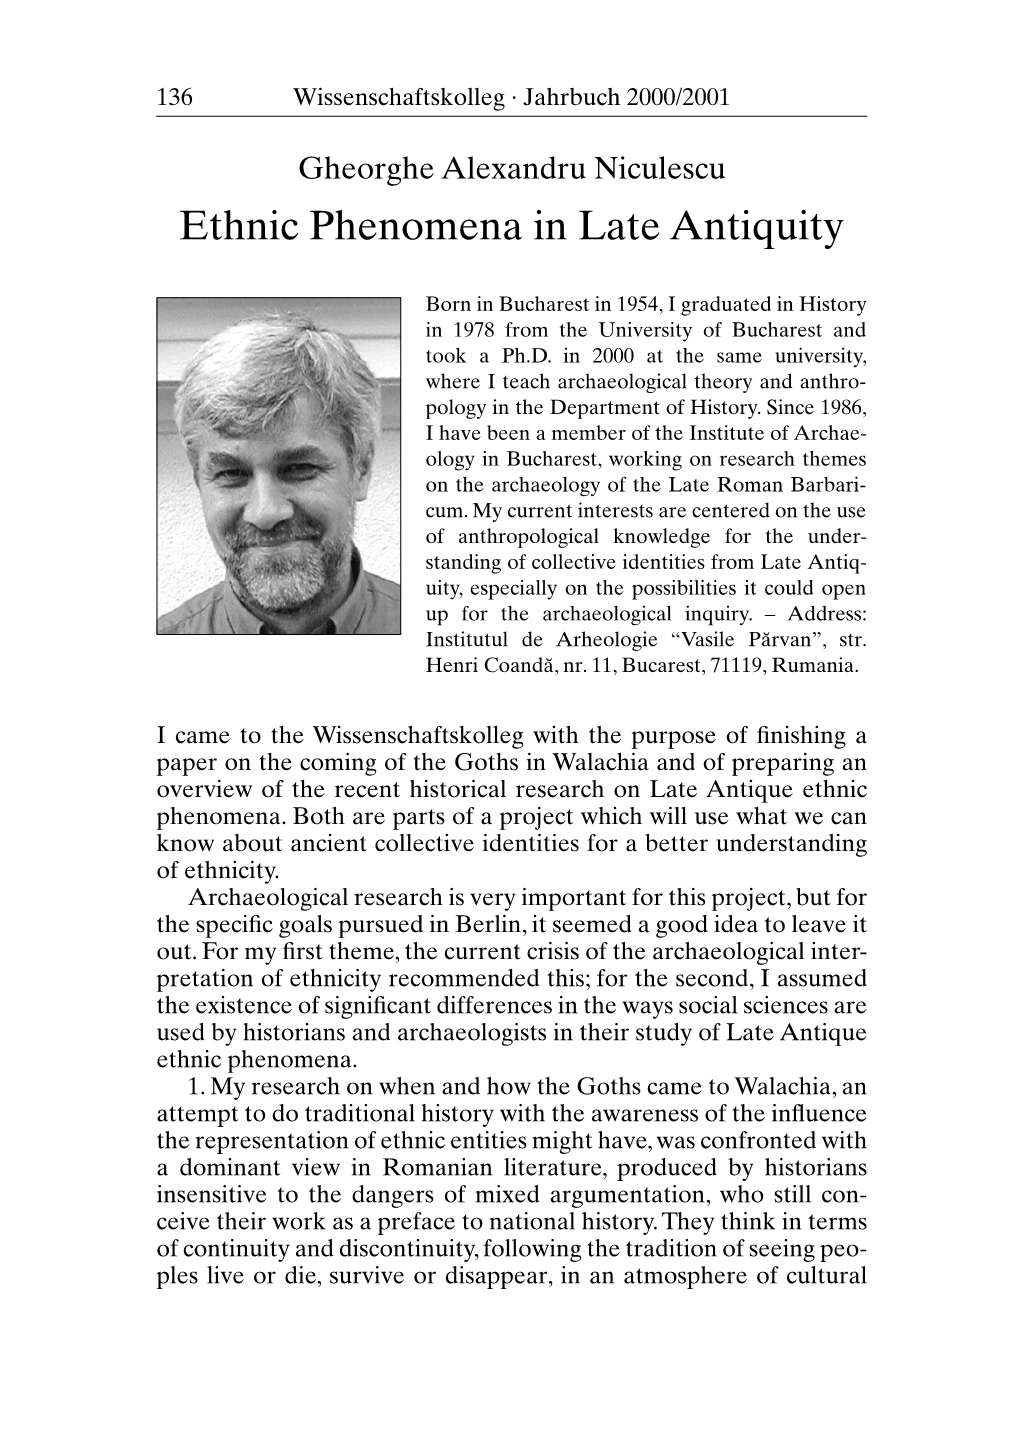 Ethnic Phenomena in Late Antiquity